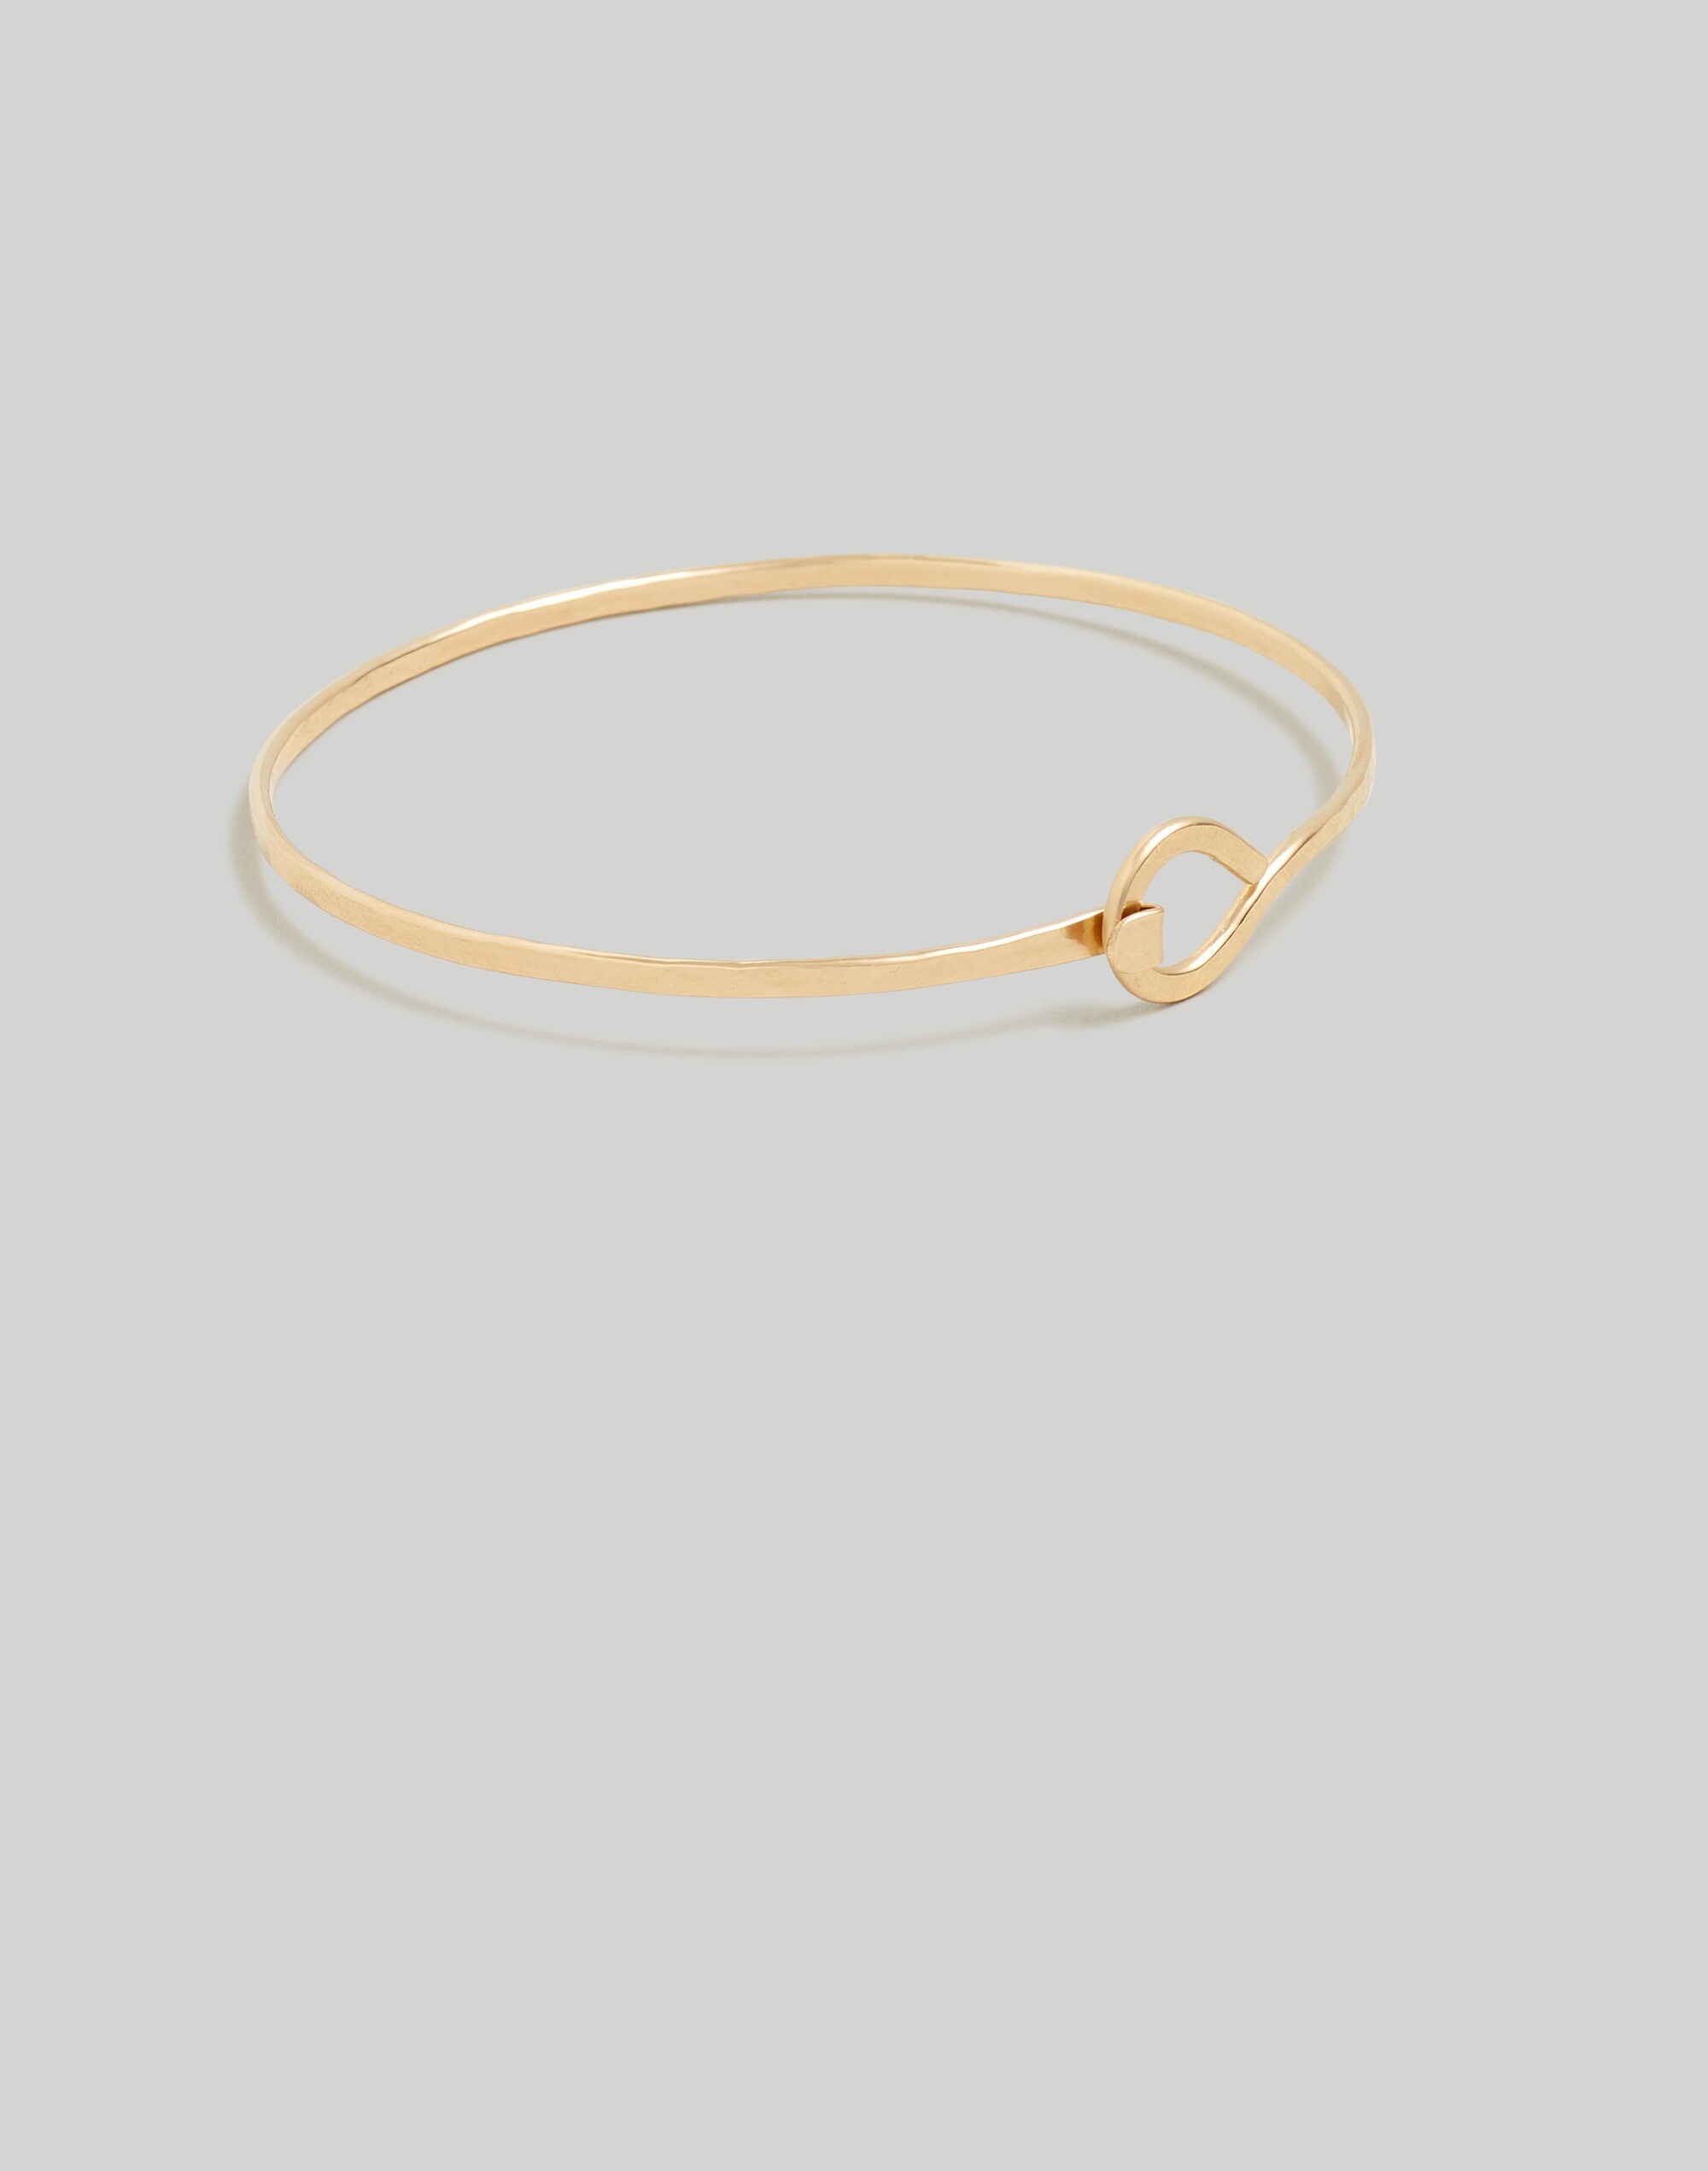 Situ Jewelry 14k Gold-Filled Amos Bangle Bracelet